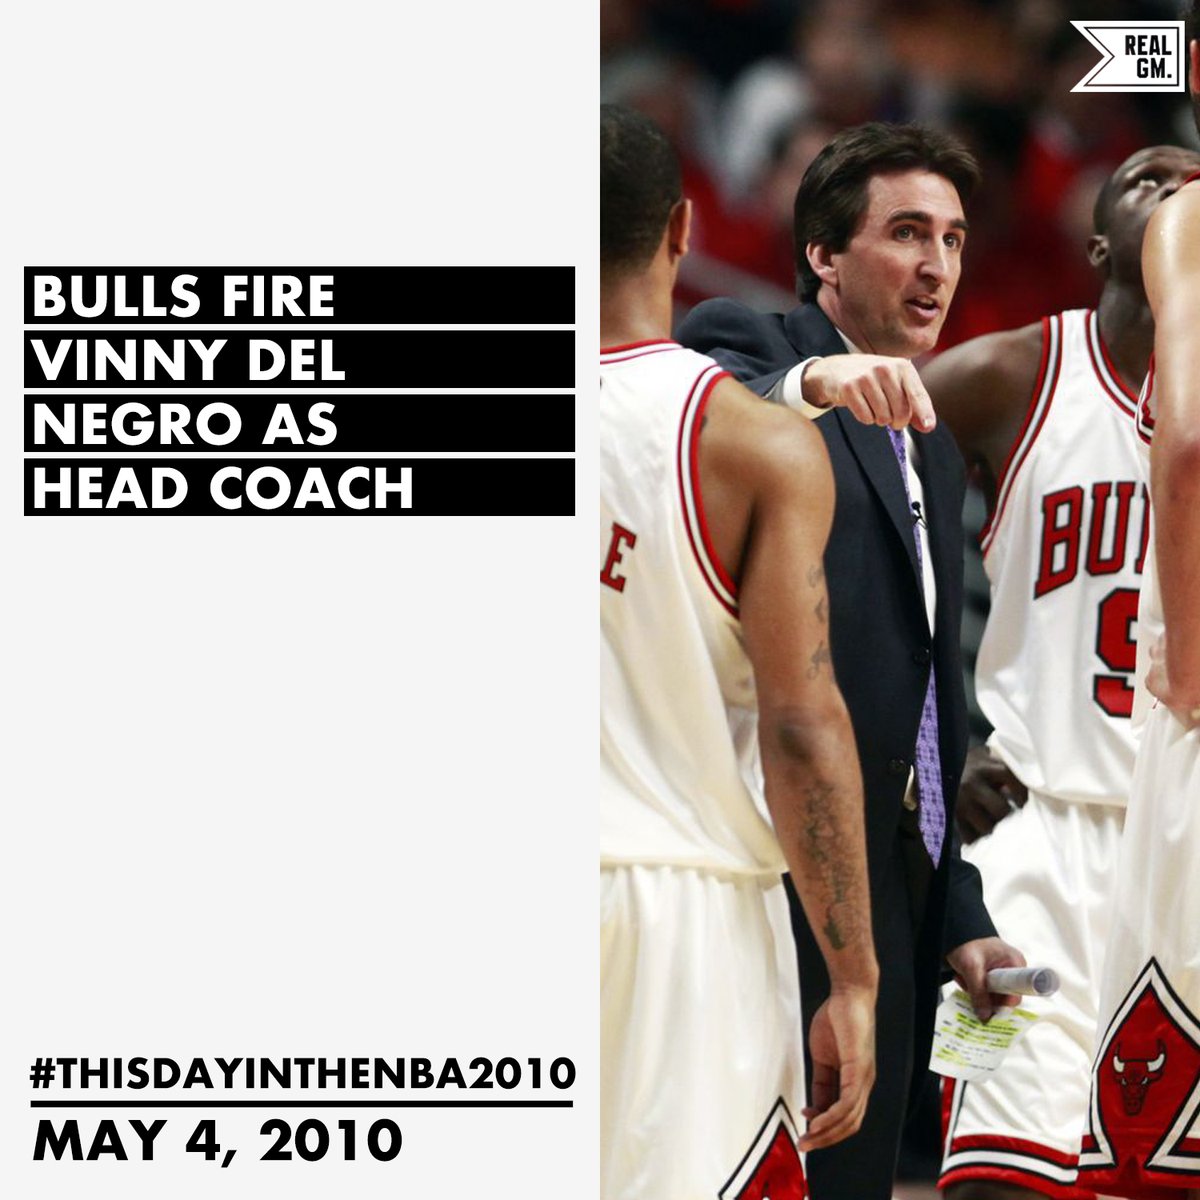  #ThisDayInTheNBA2010May 4, 2010Bulls Fire Vinny Del Negro As Head Coach https://basketball.realgm.com/wiretap/203678/Vinny-Del-Negro-Fired-By-Bulls